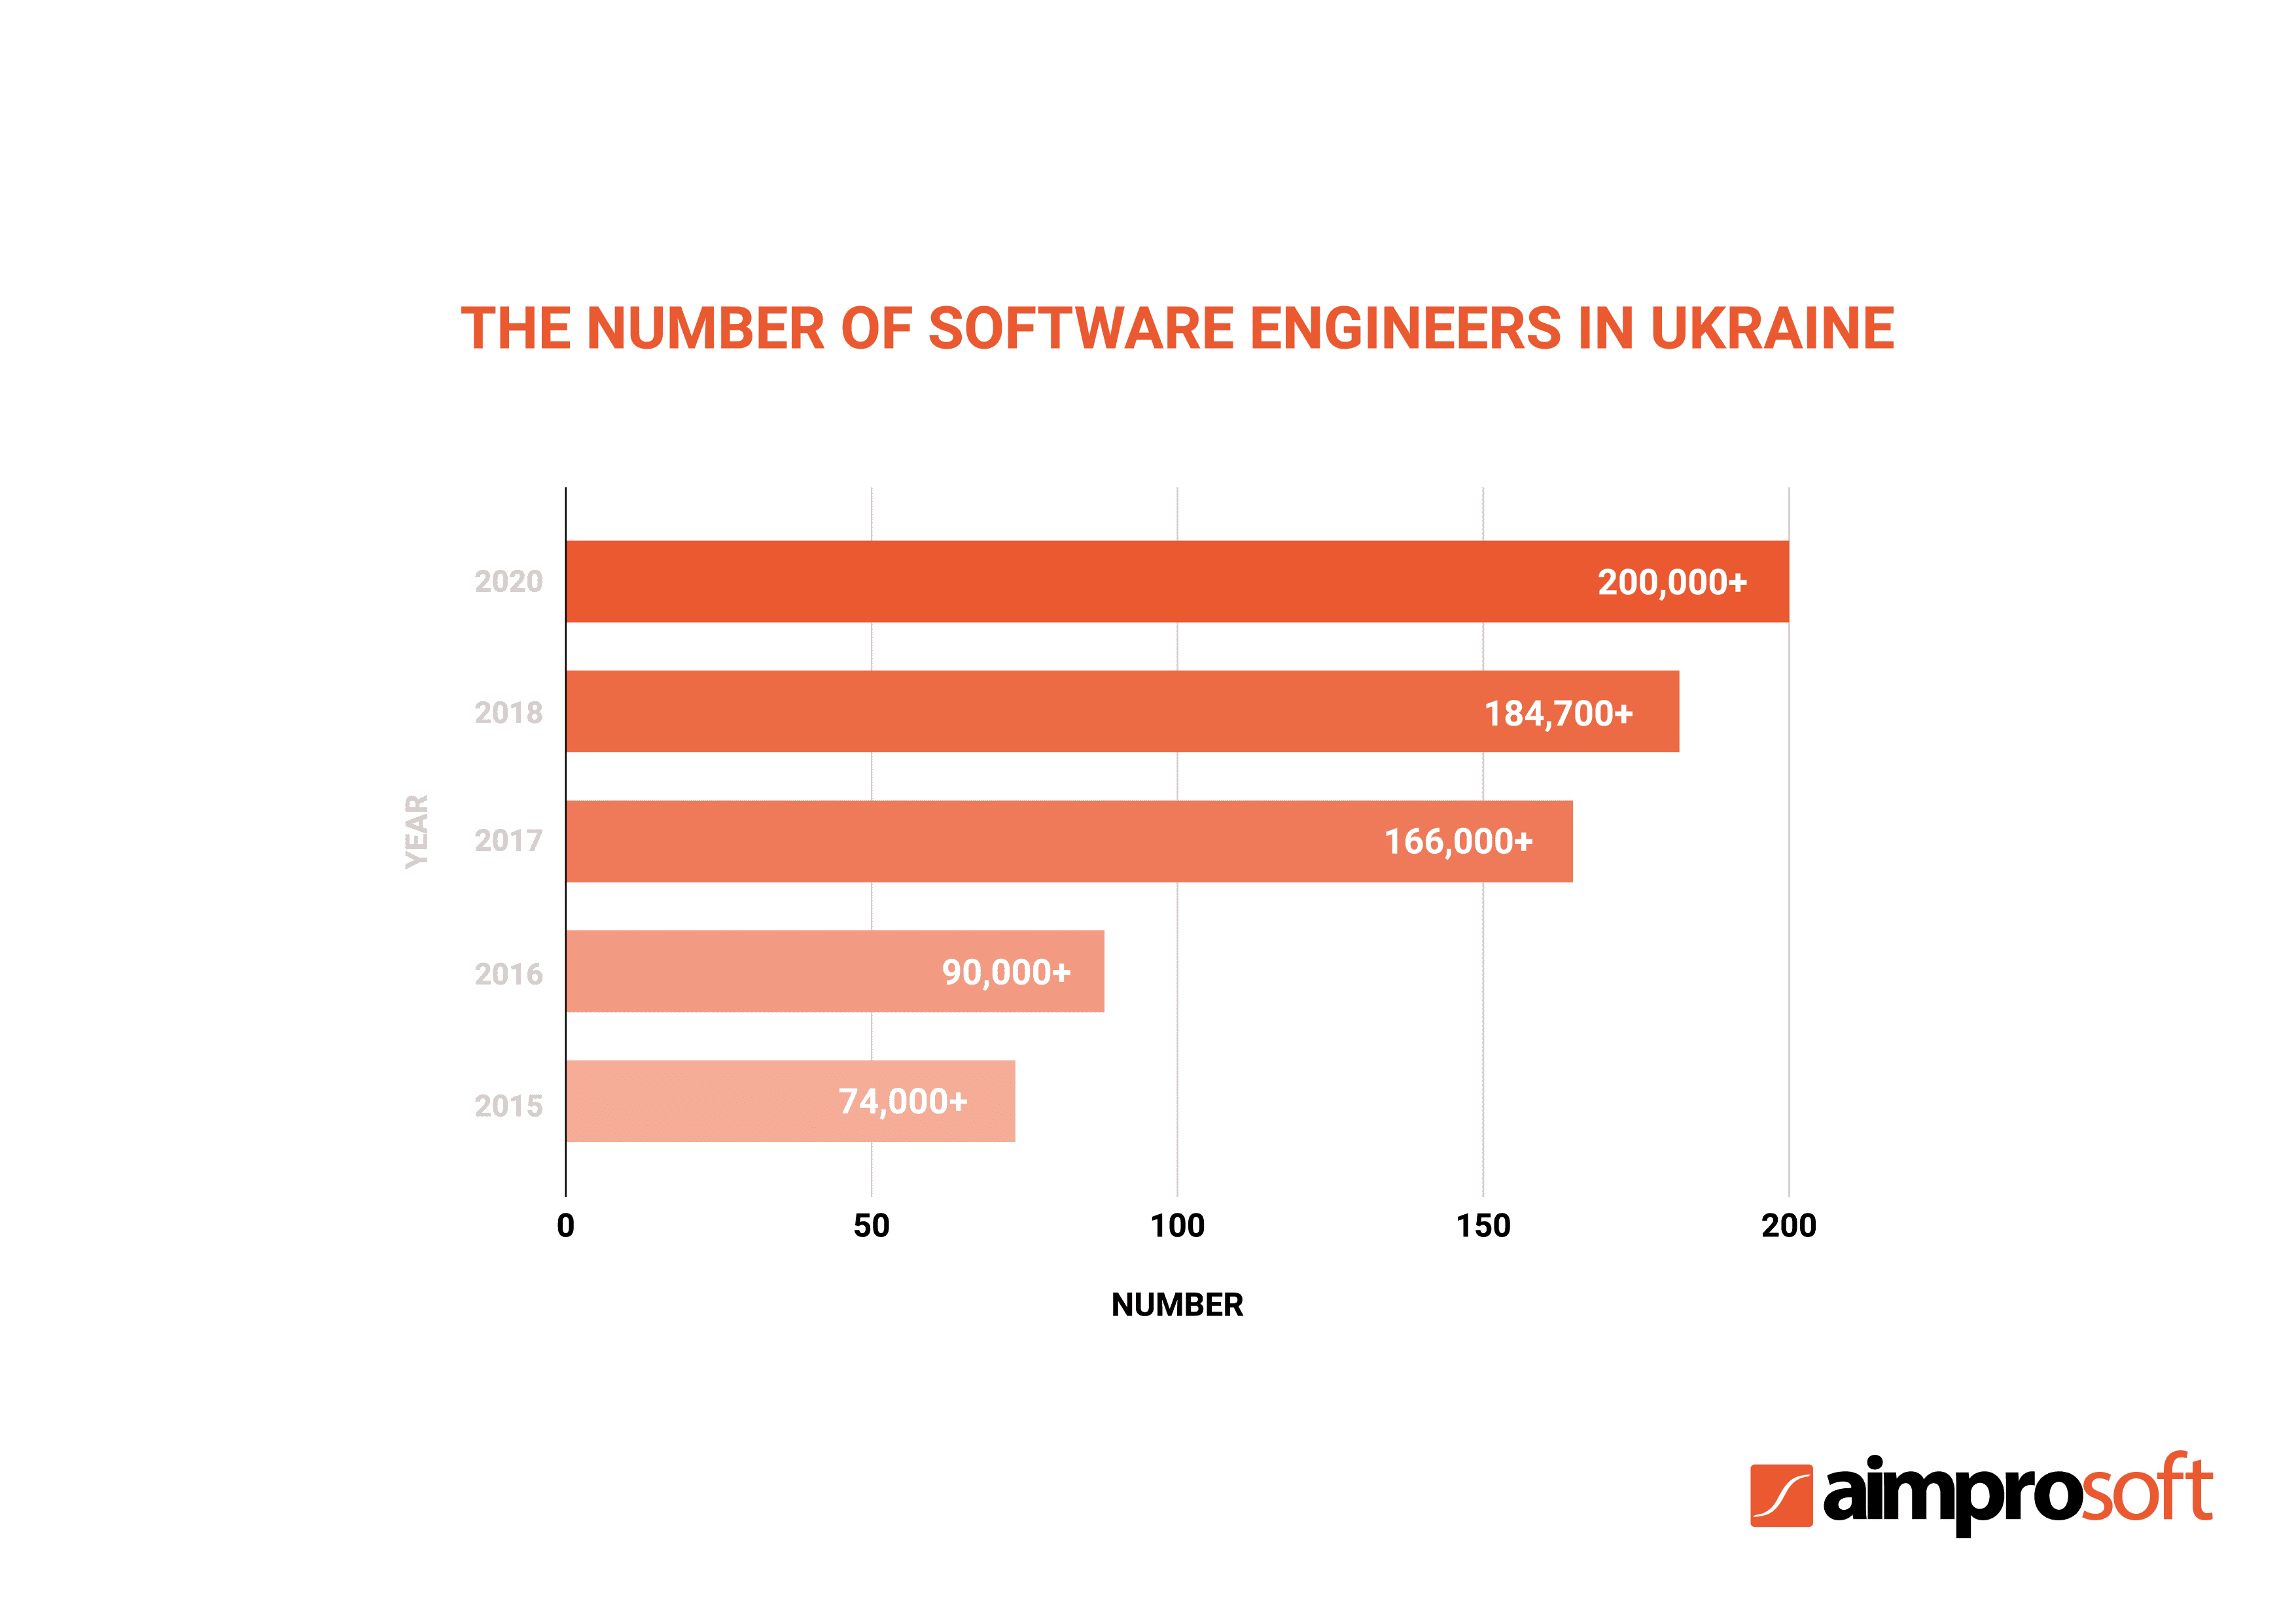 The number of software engineers in Ukraine